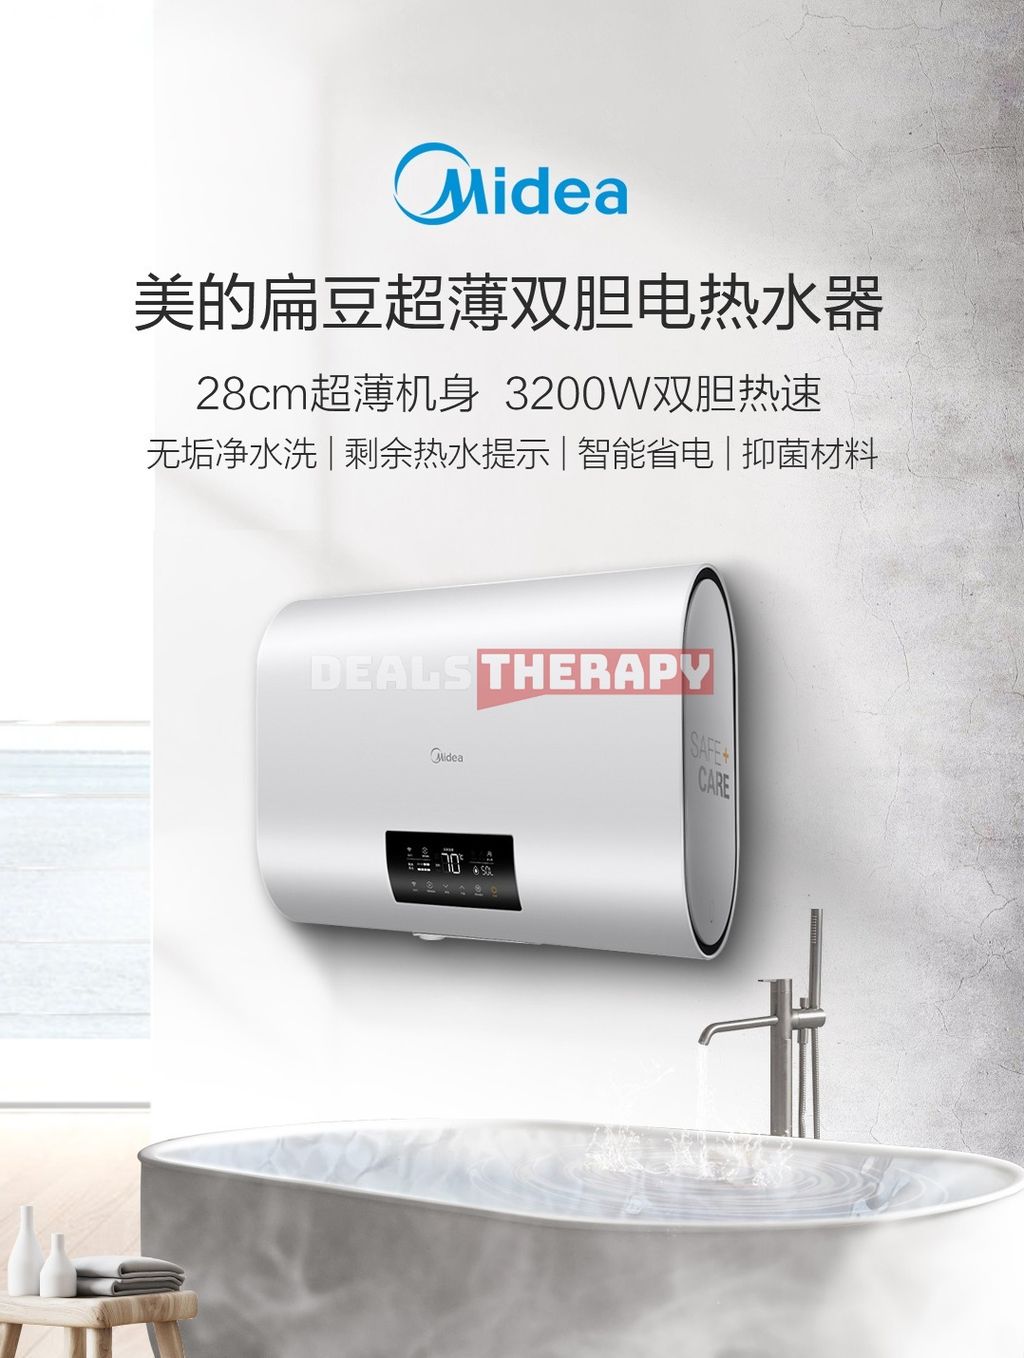 Midea Ultra-Thin Electric Water Heater